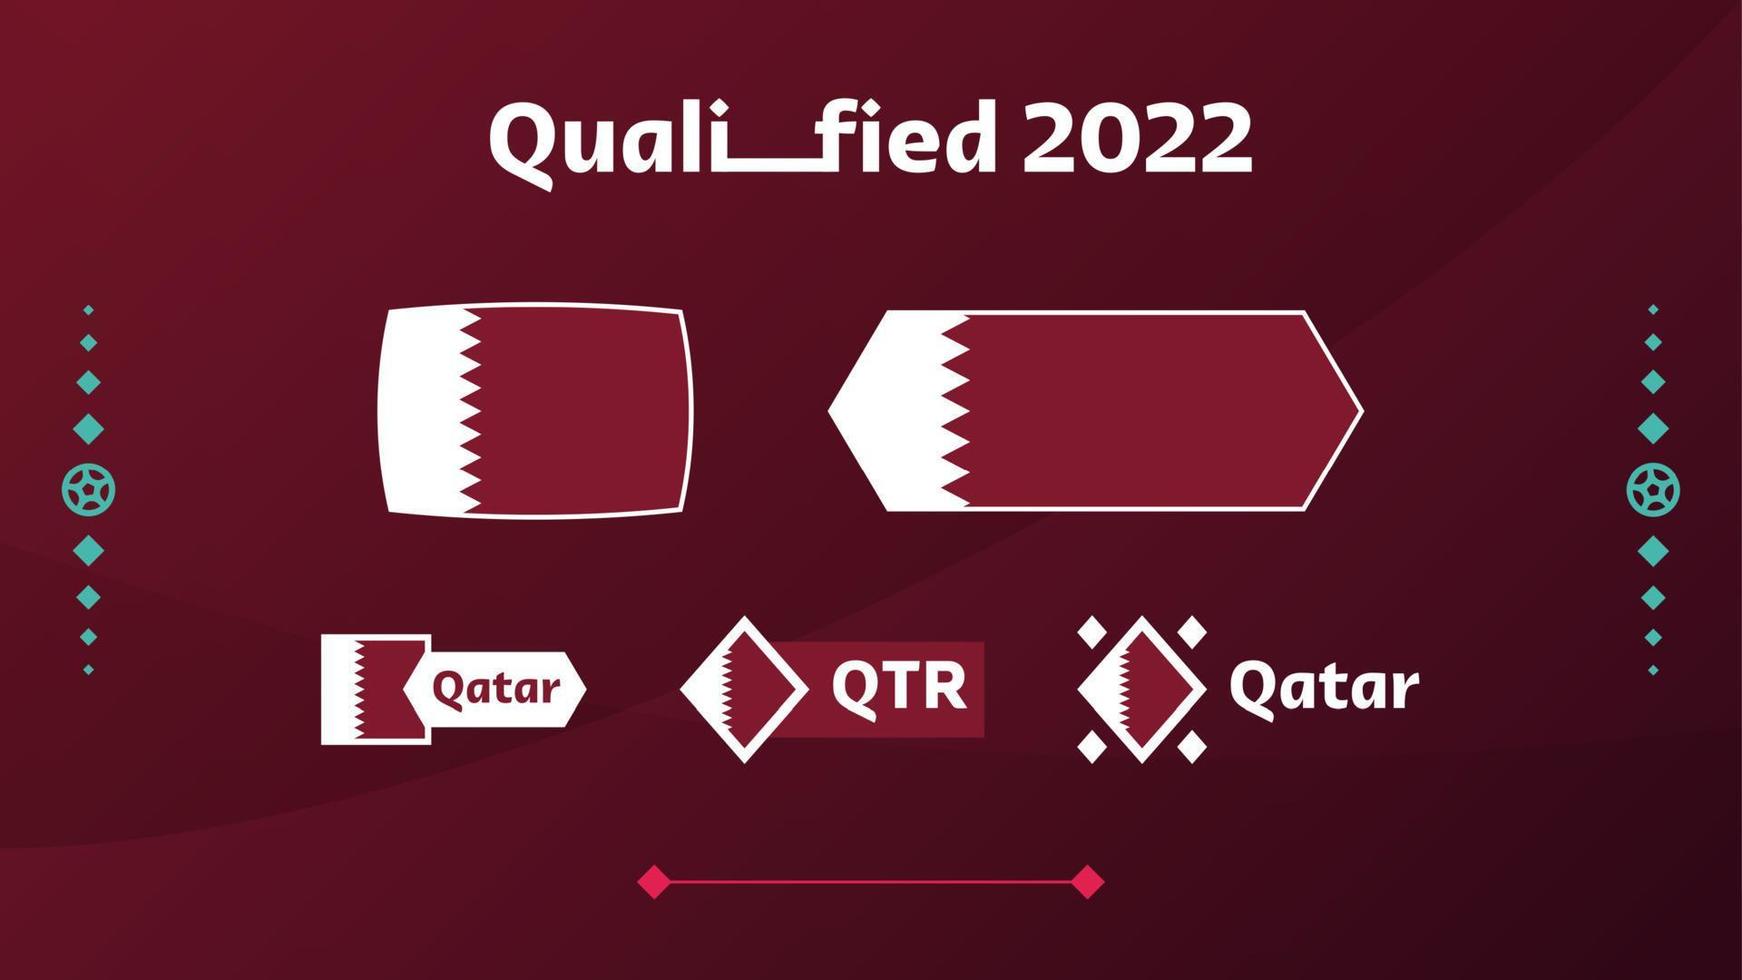 set van qatar vlag en tekst op 2022 voetbaltoernooi achtergrond. vector illustratie voetbal patroon voor banner, kaart, website. bordeaux kleur nationale vlag qatar